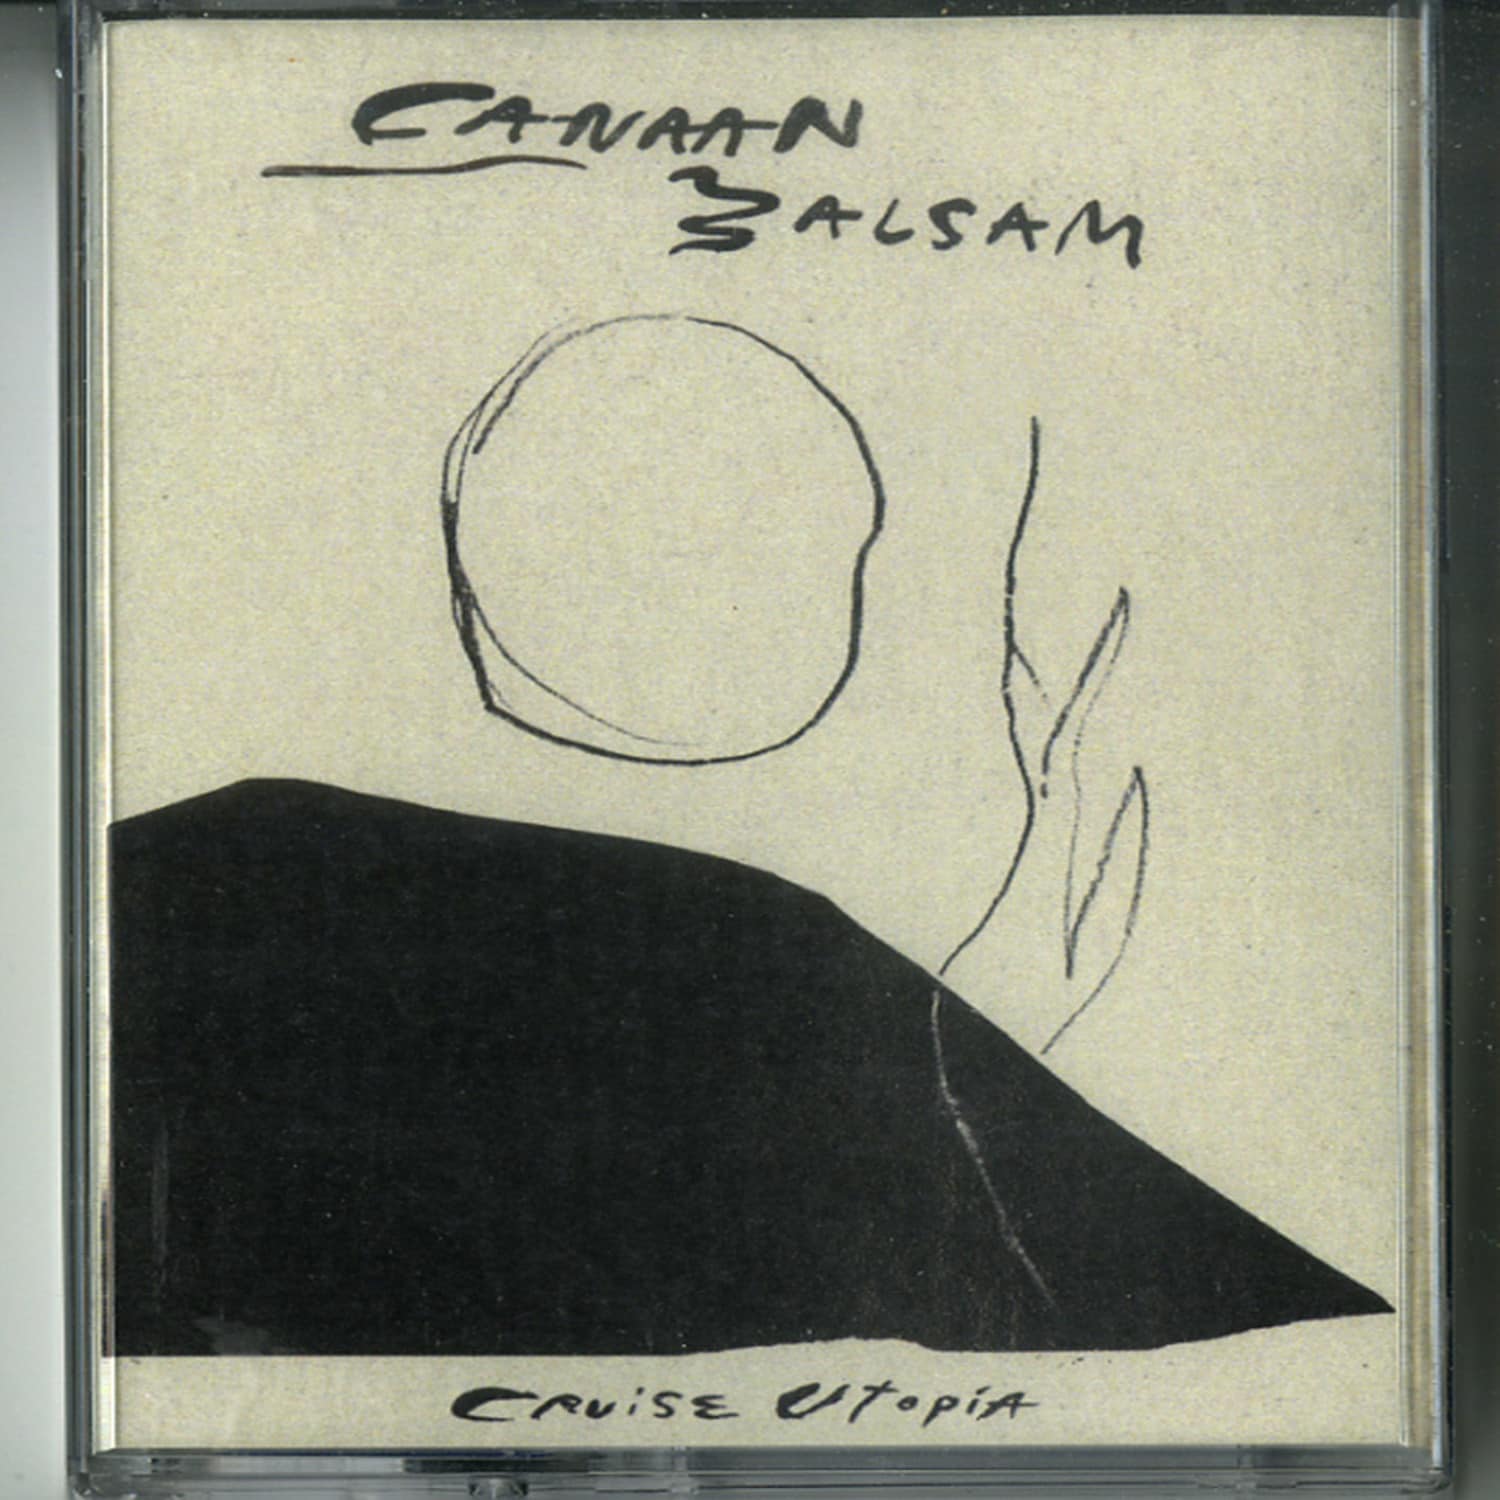 Canaan Balsam - CRUISE UTOPIA 